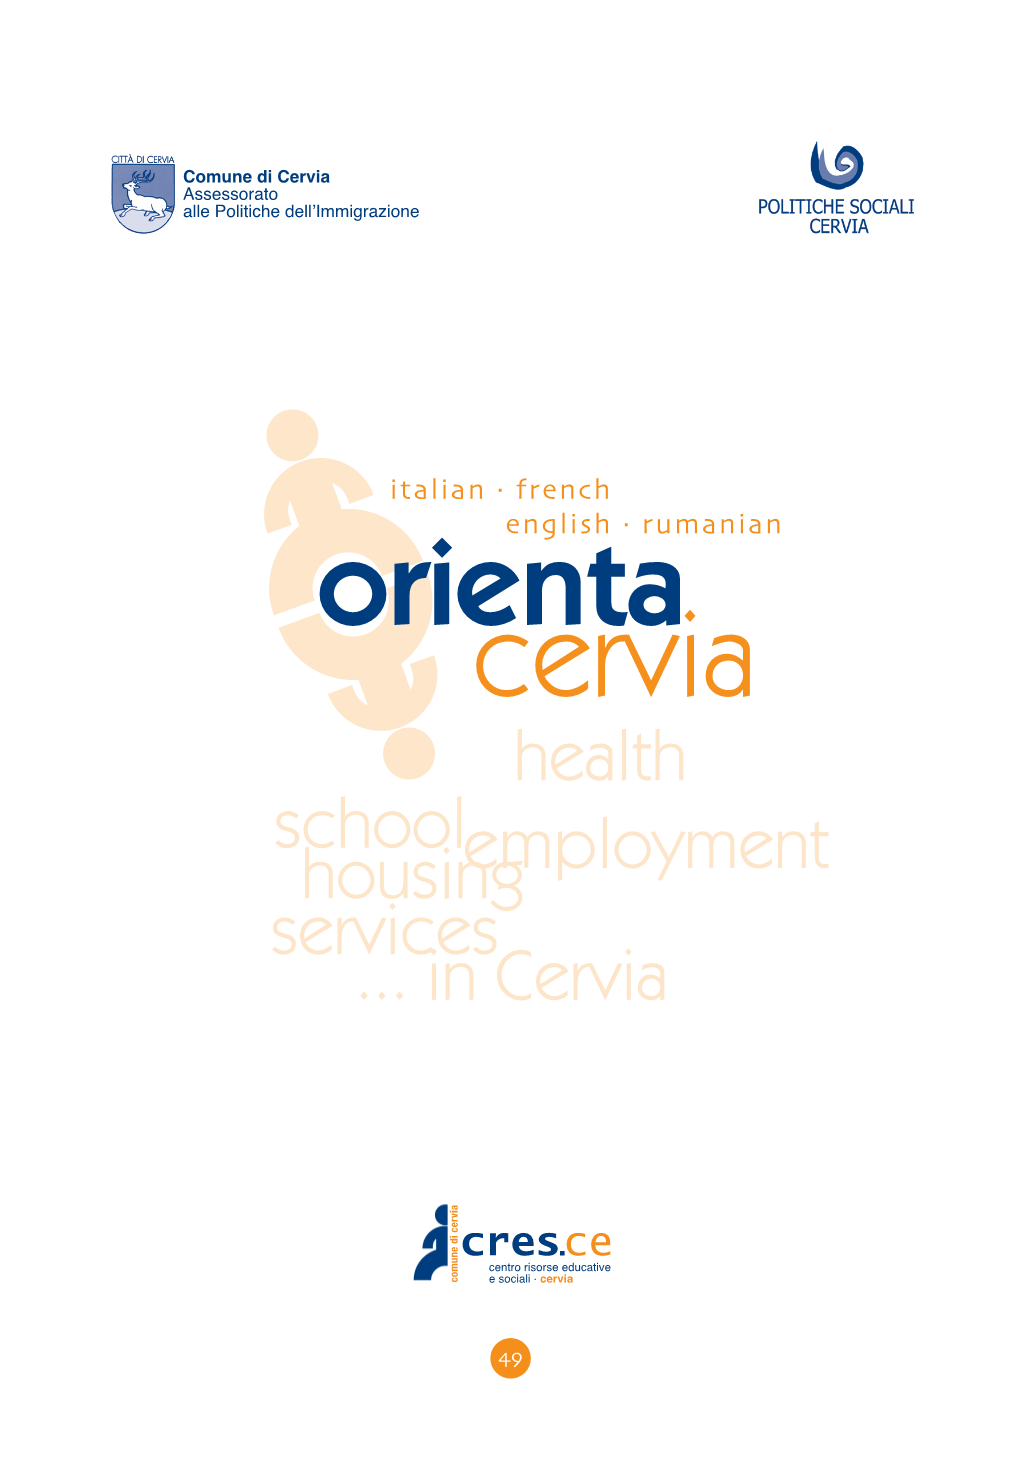 Health Schoolemployment Housing Services ... in Cervia